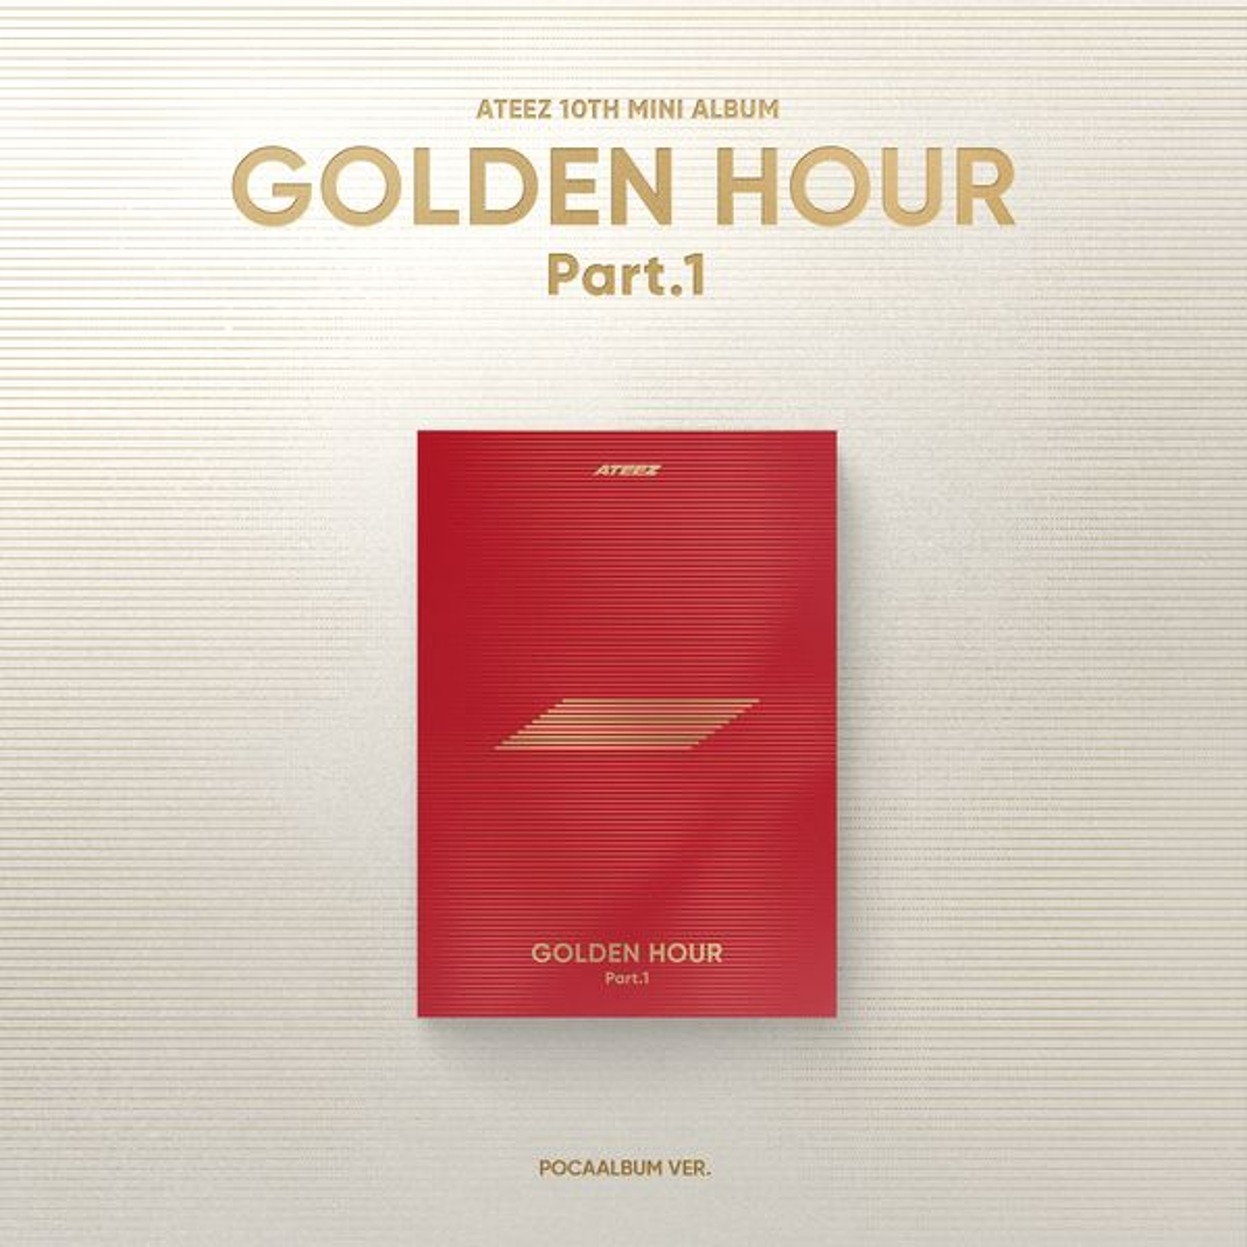 ATEEZ - 10th mini album [GOLDEN HOUR: Part.1] (POCAALBUM)